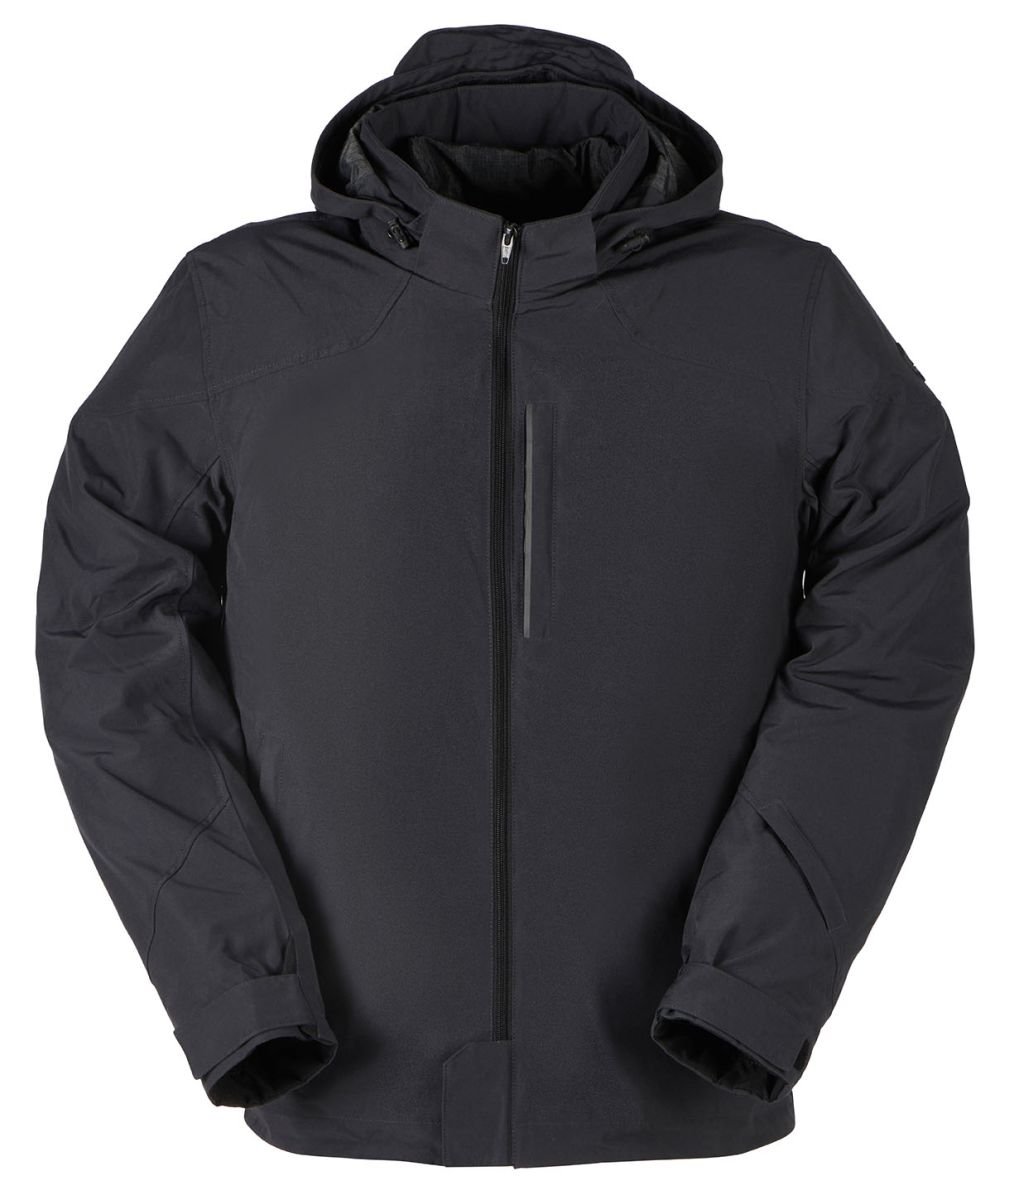 Image of Furygan London Evo 2 Jacket Gray Anthracite Size M EN